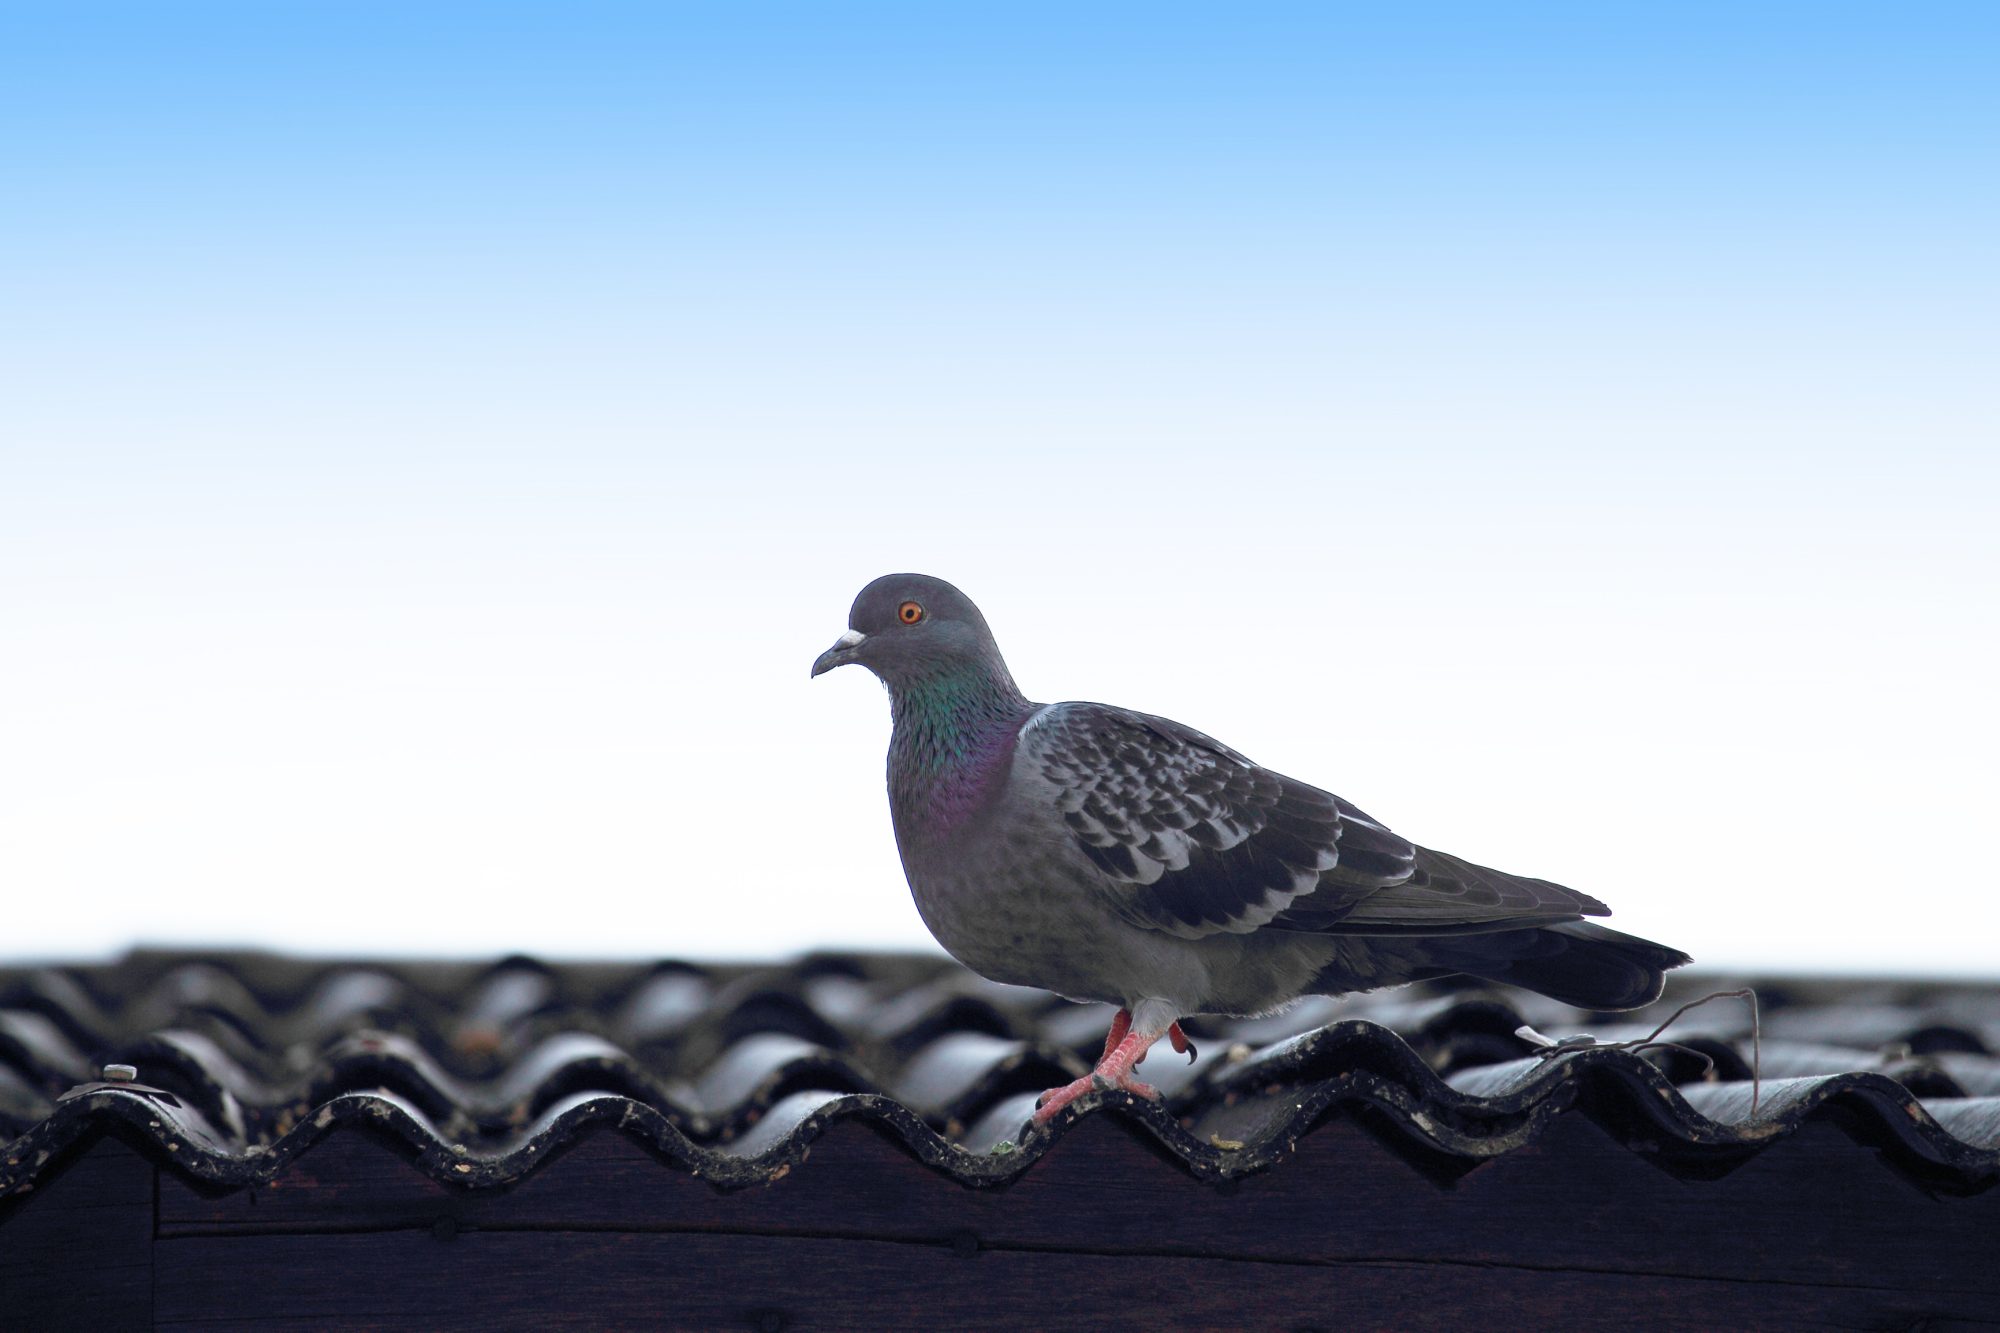 pigeon proofing